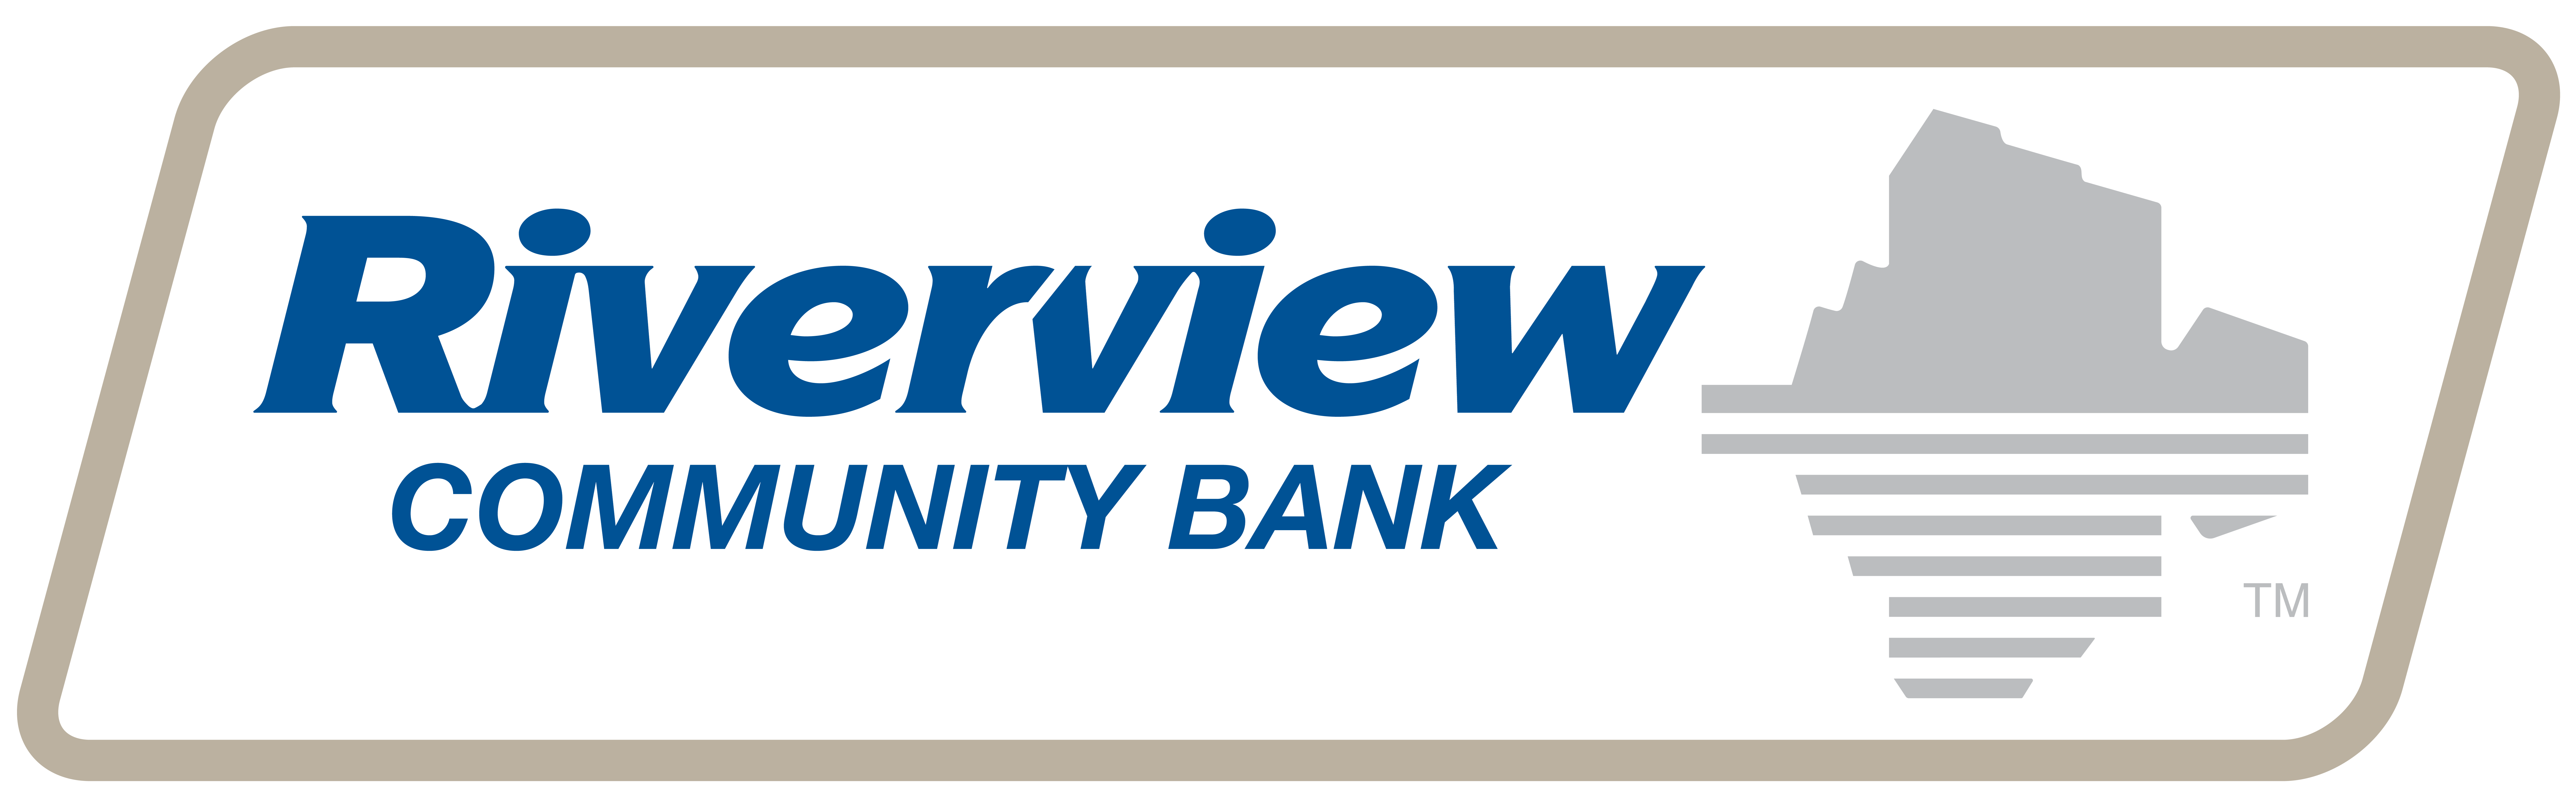 Riverview Community Bank Logo 2020 01 